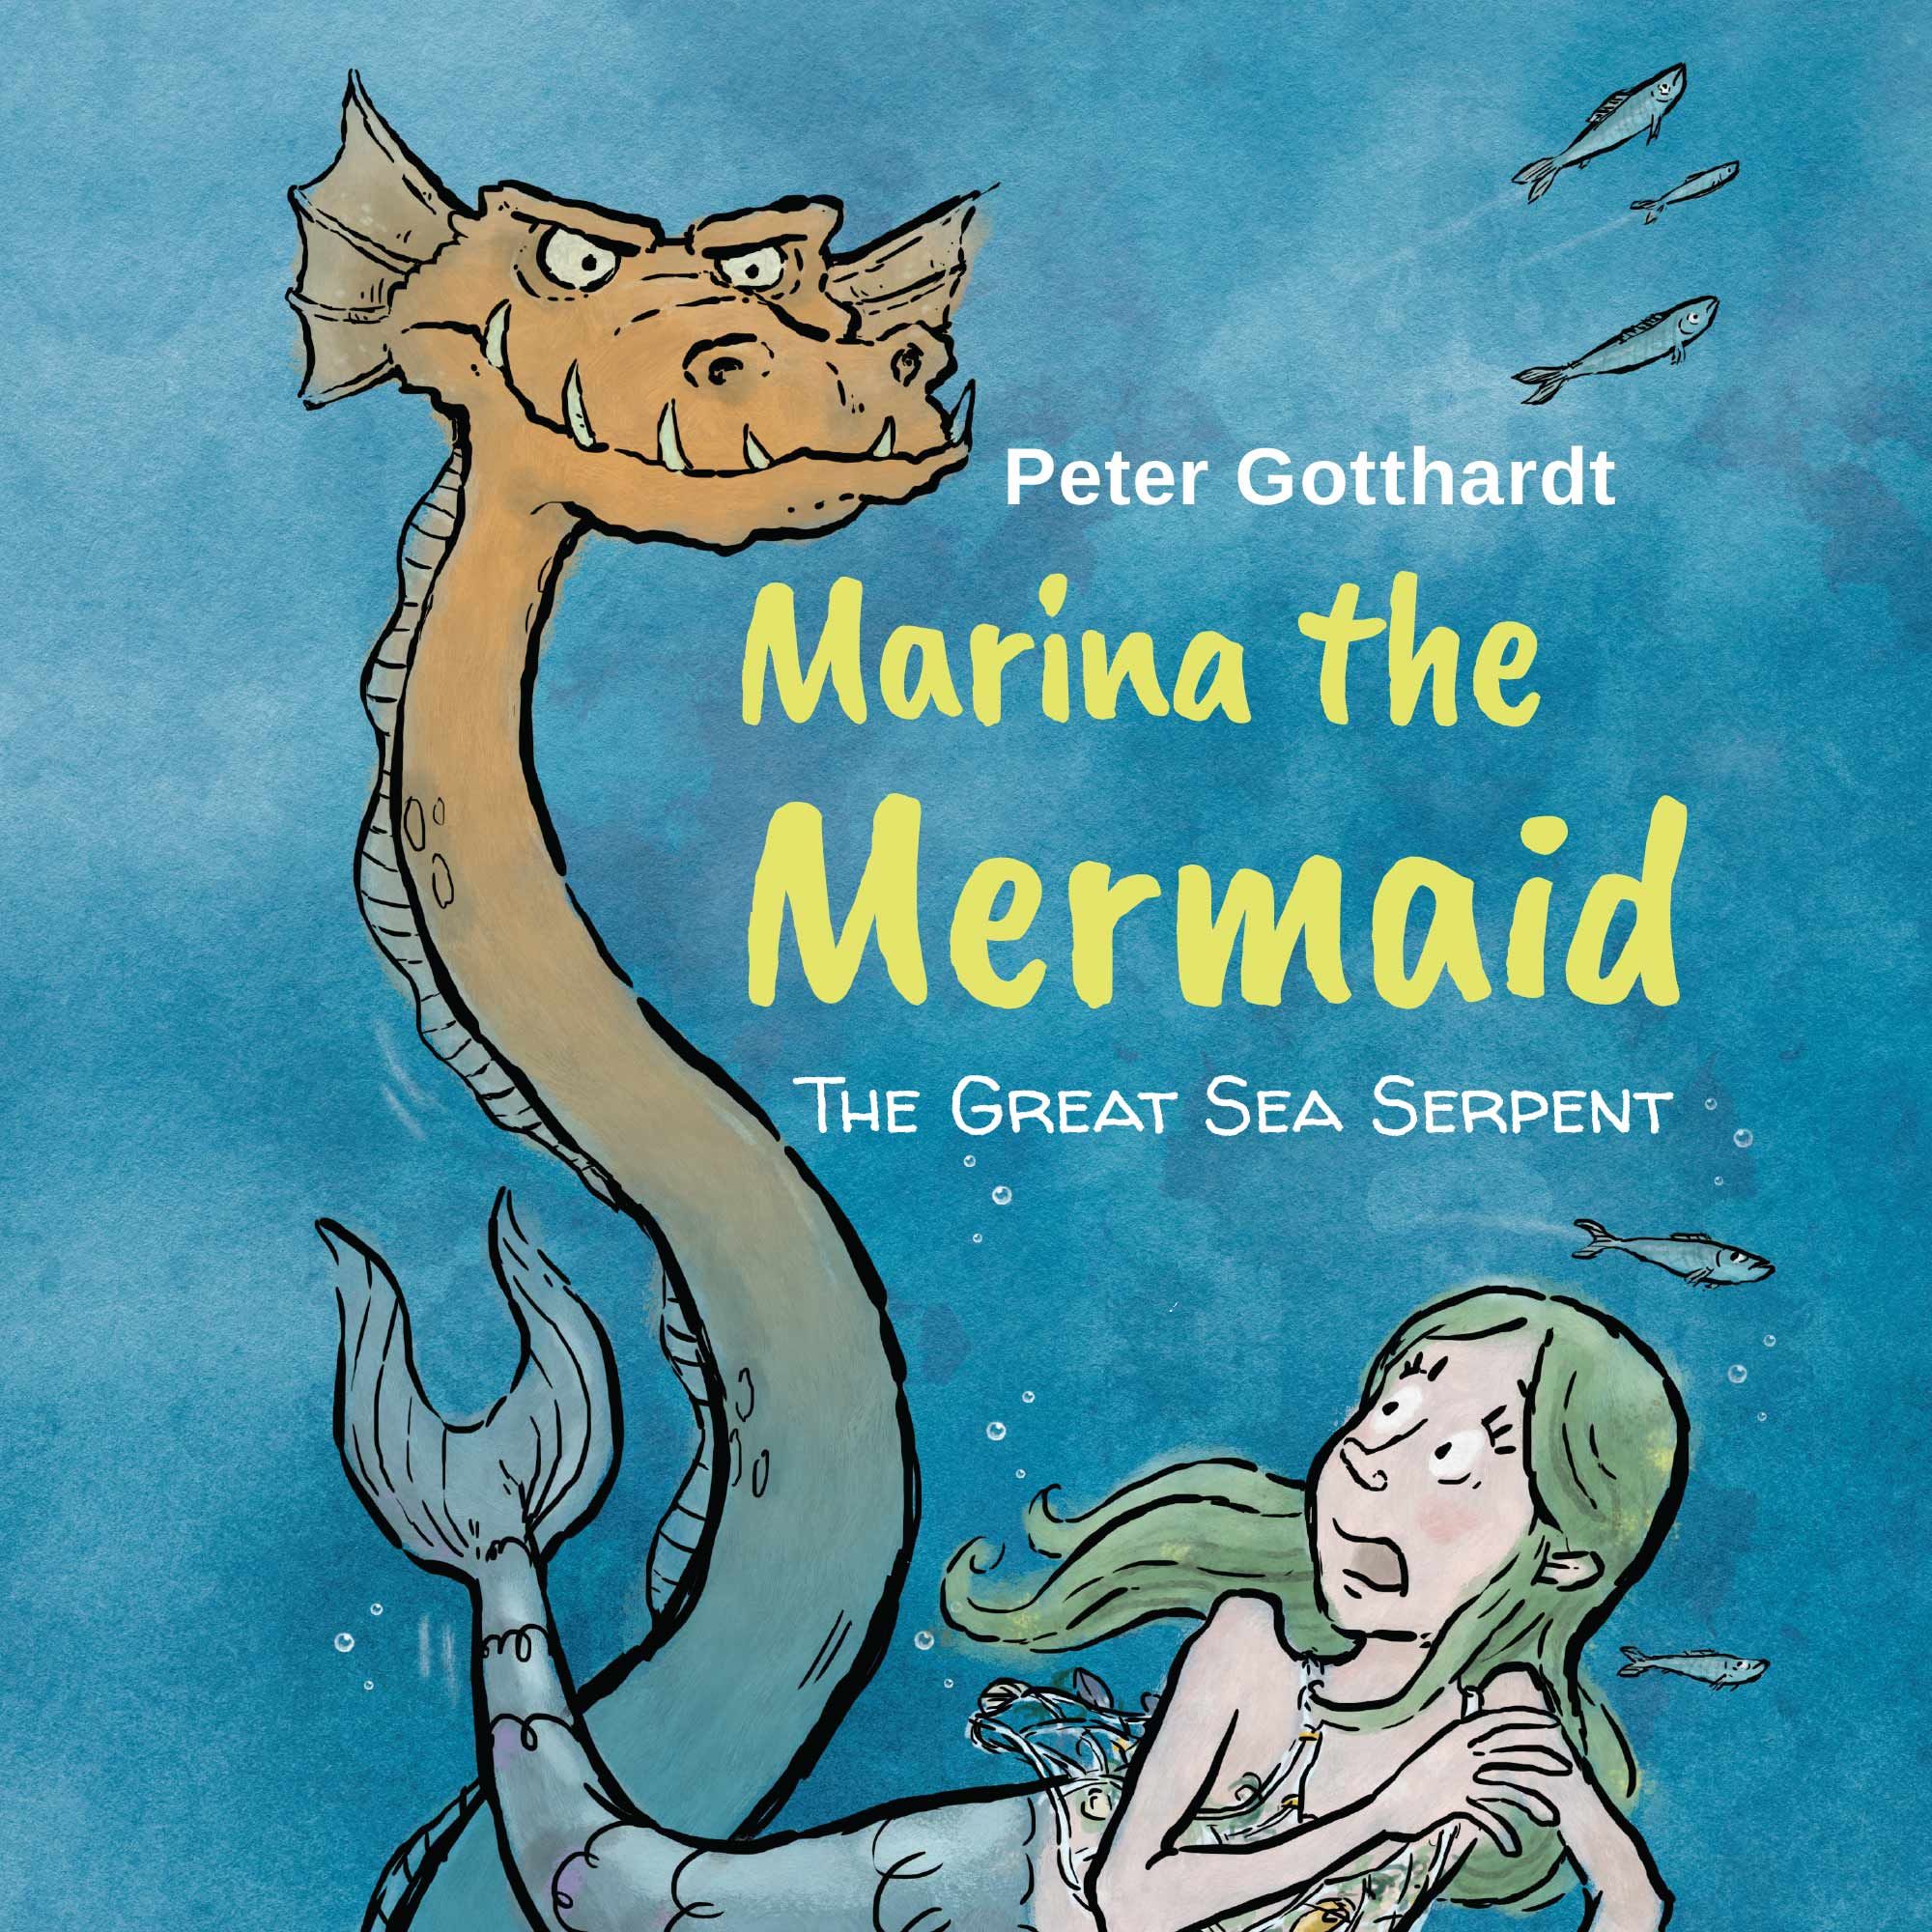 Marina the Mermaid #2: The Great Sea Serpent, lydbog af Peter Gotthardt